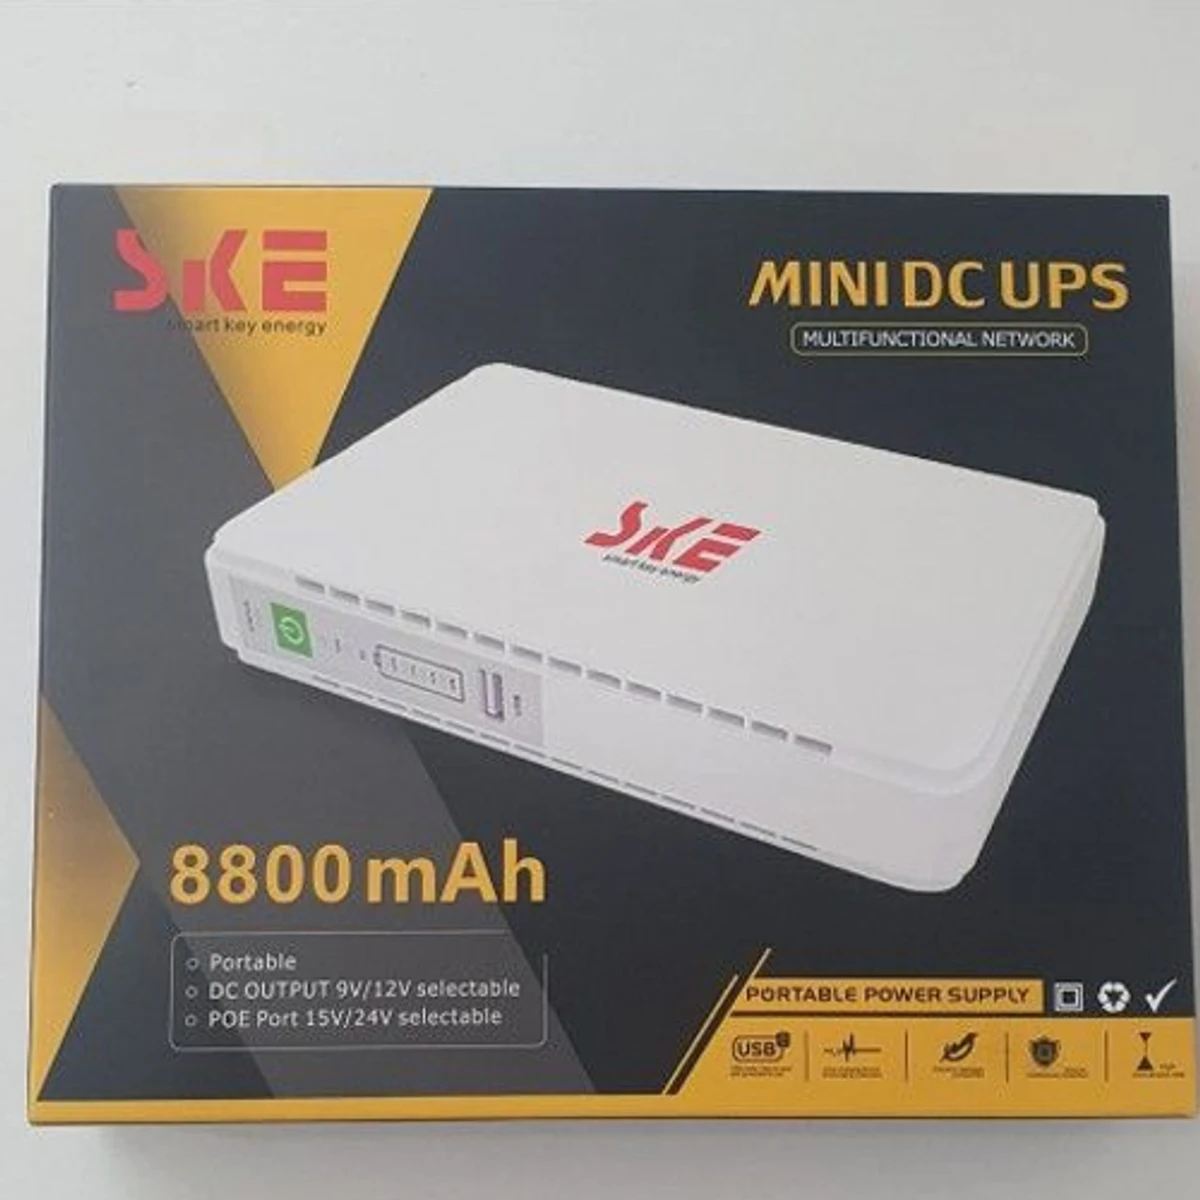 SKE PoE 430P Mini DC UPS For WIFI Router ONU & IP Camera (17W)